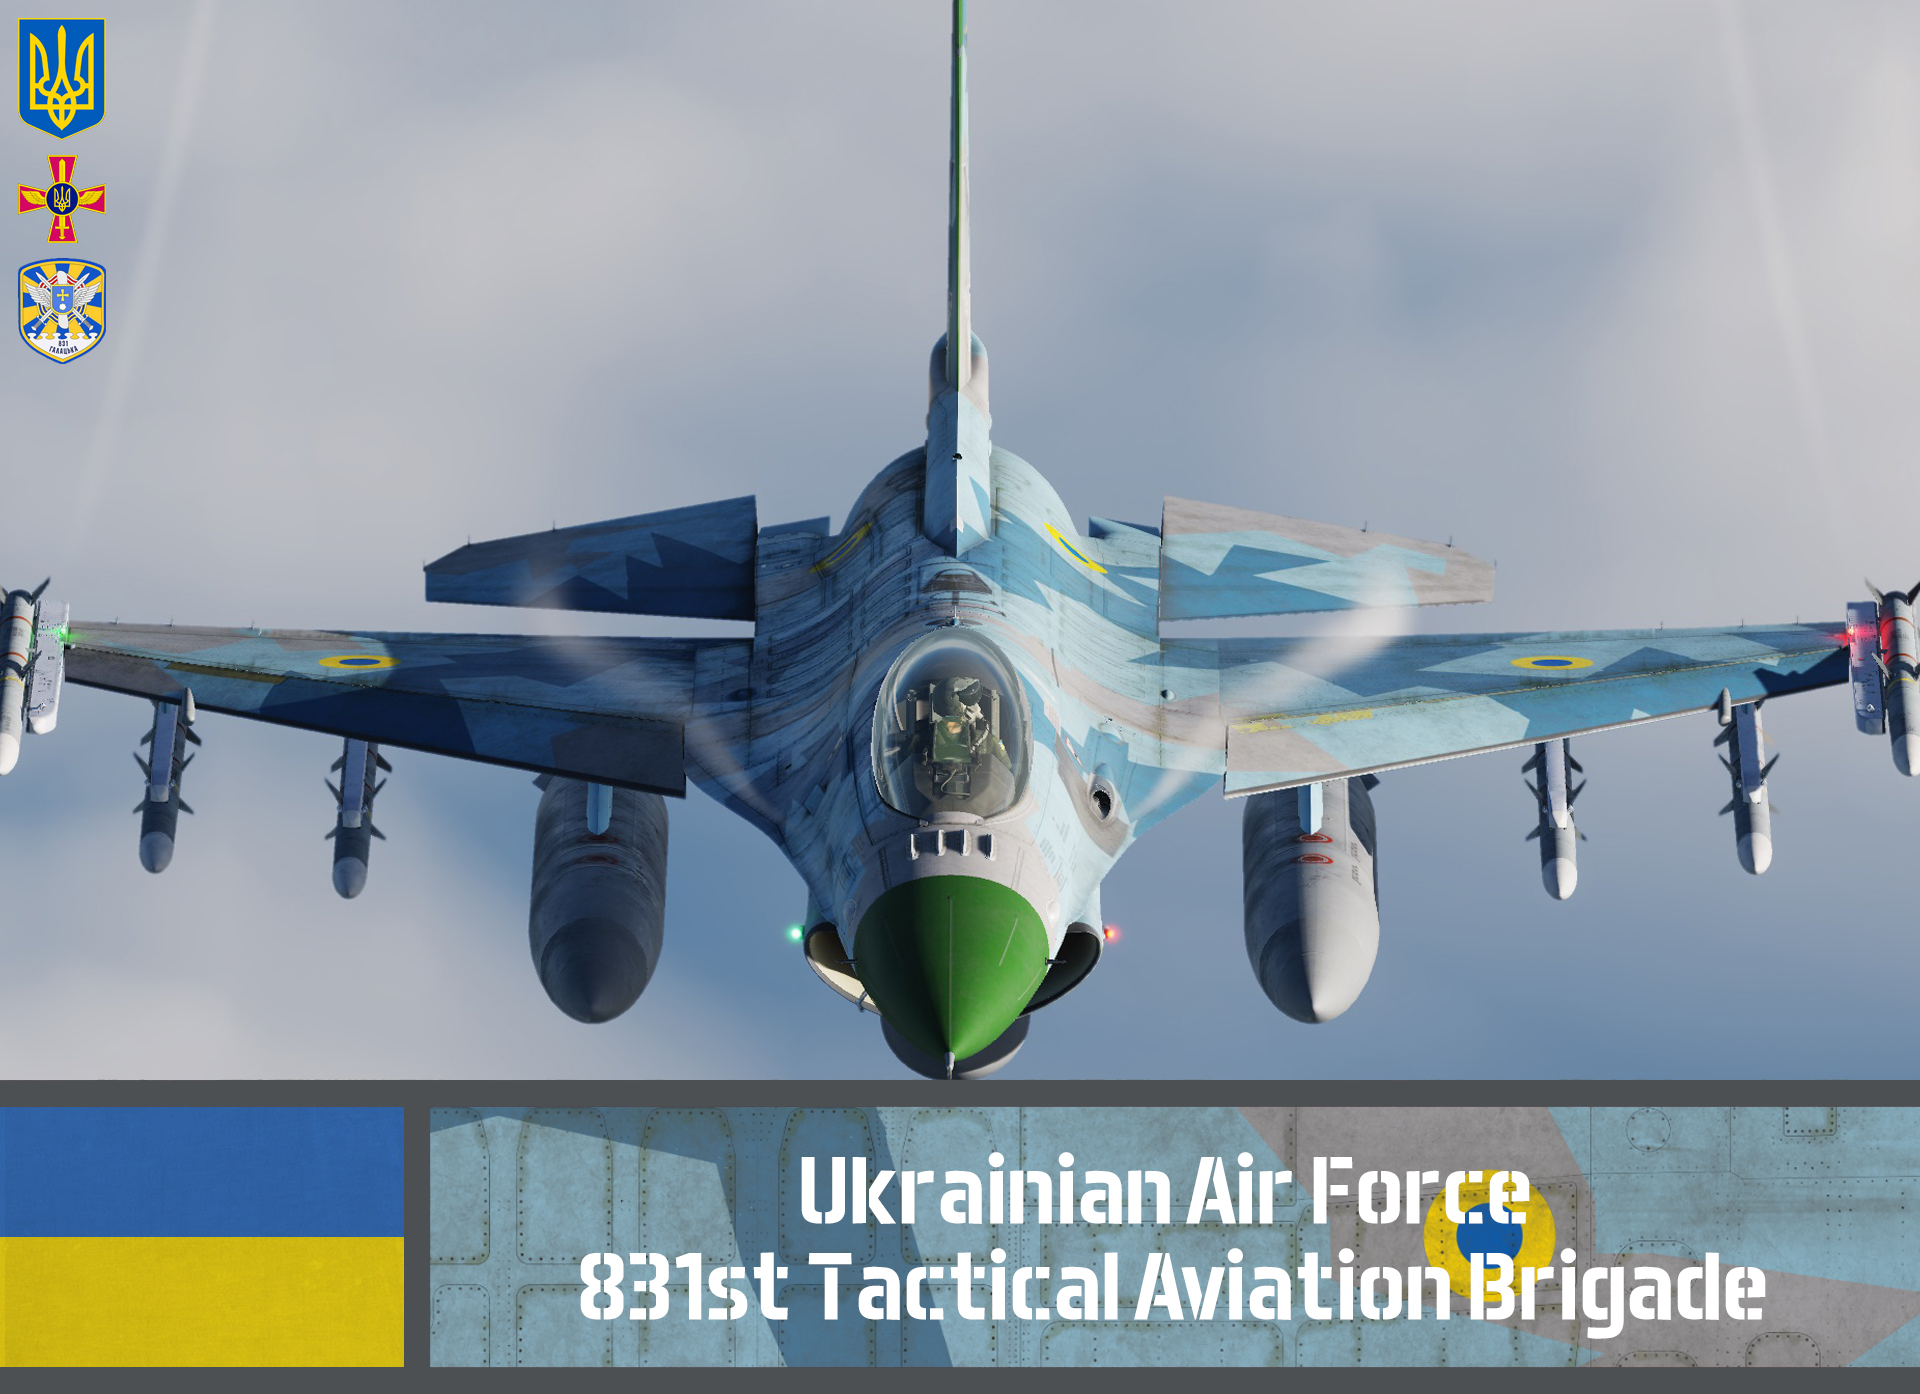 F-16C - 831st Tactical Aviation Brigade, High-Viz Splinter | Ukraine (Fictional)